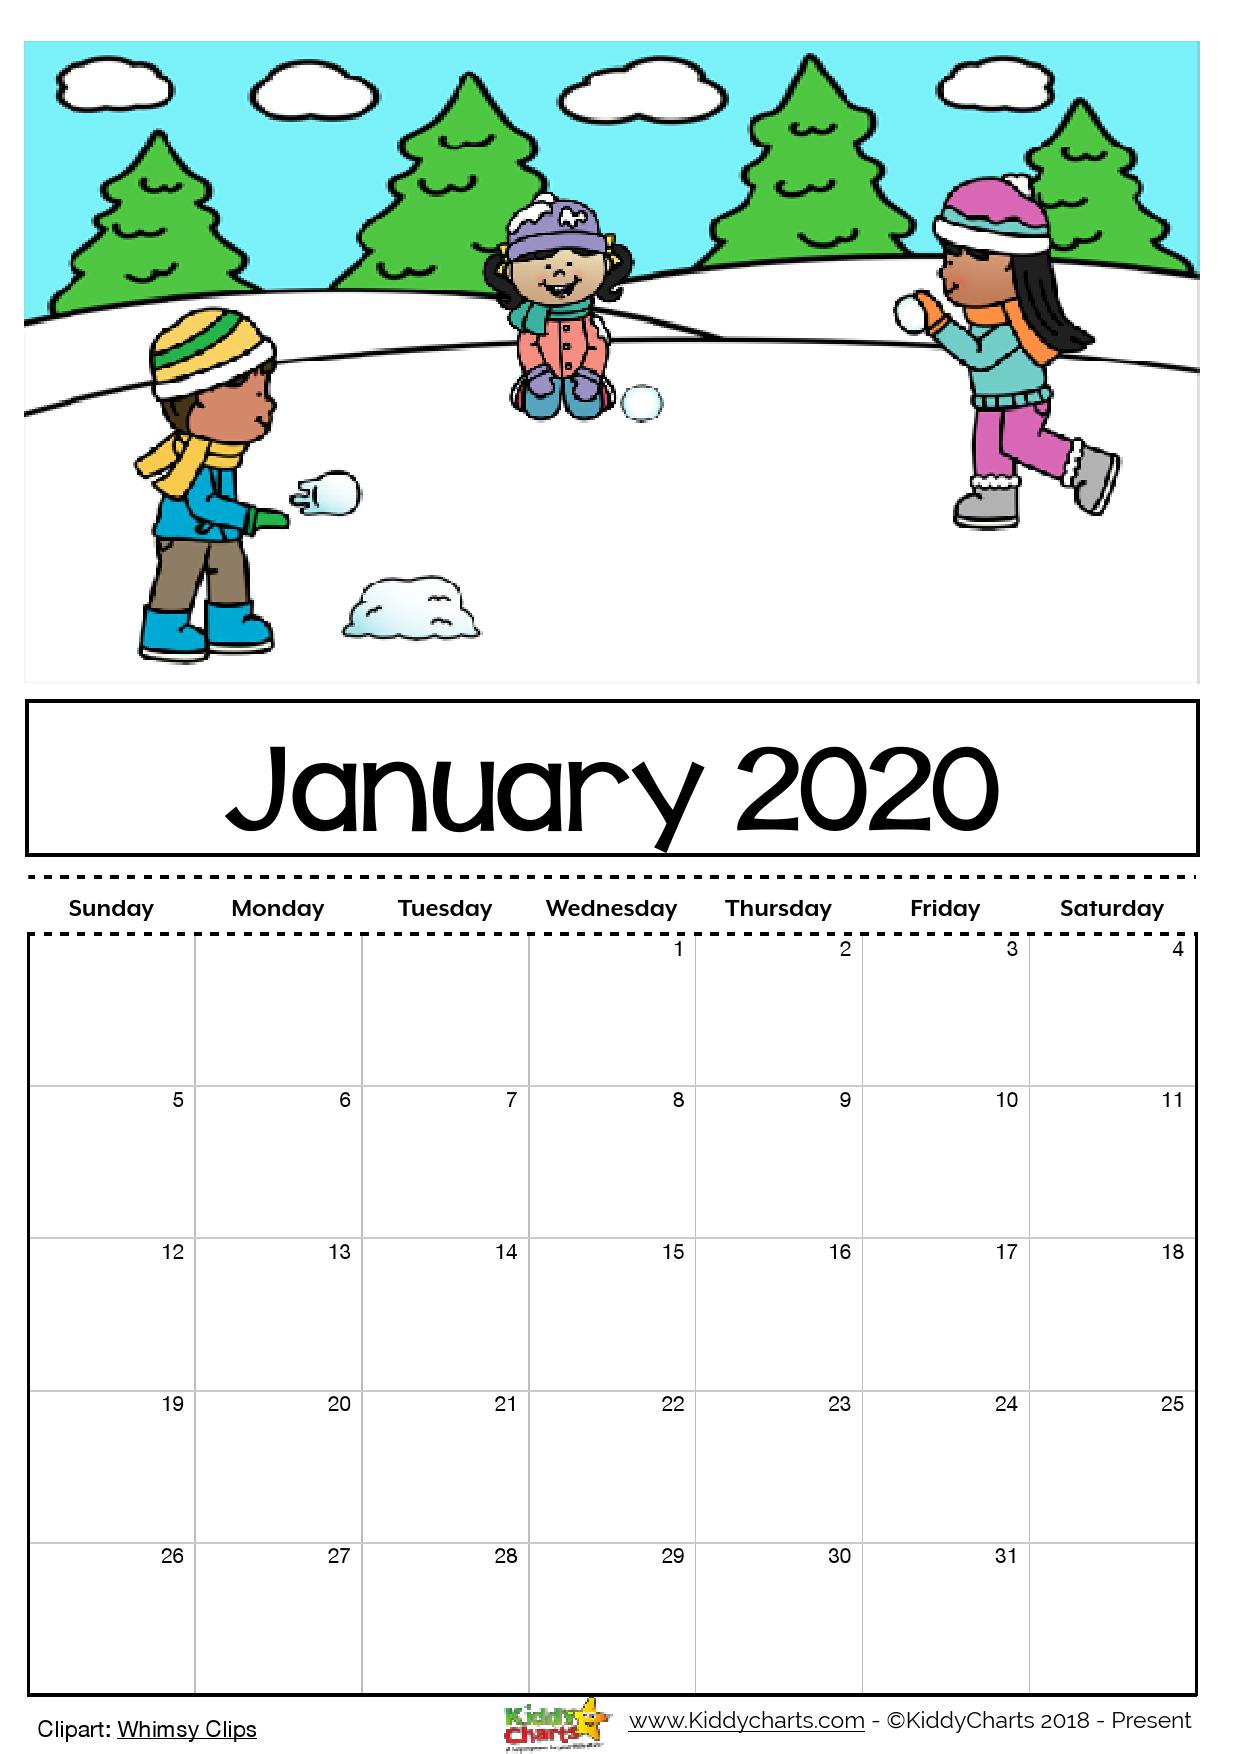 Free Clipart January 2020